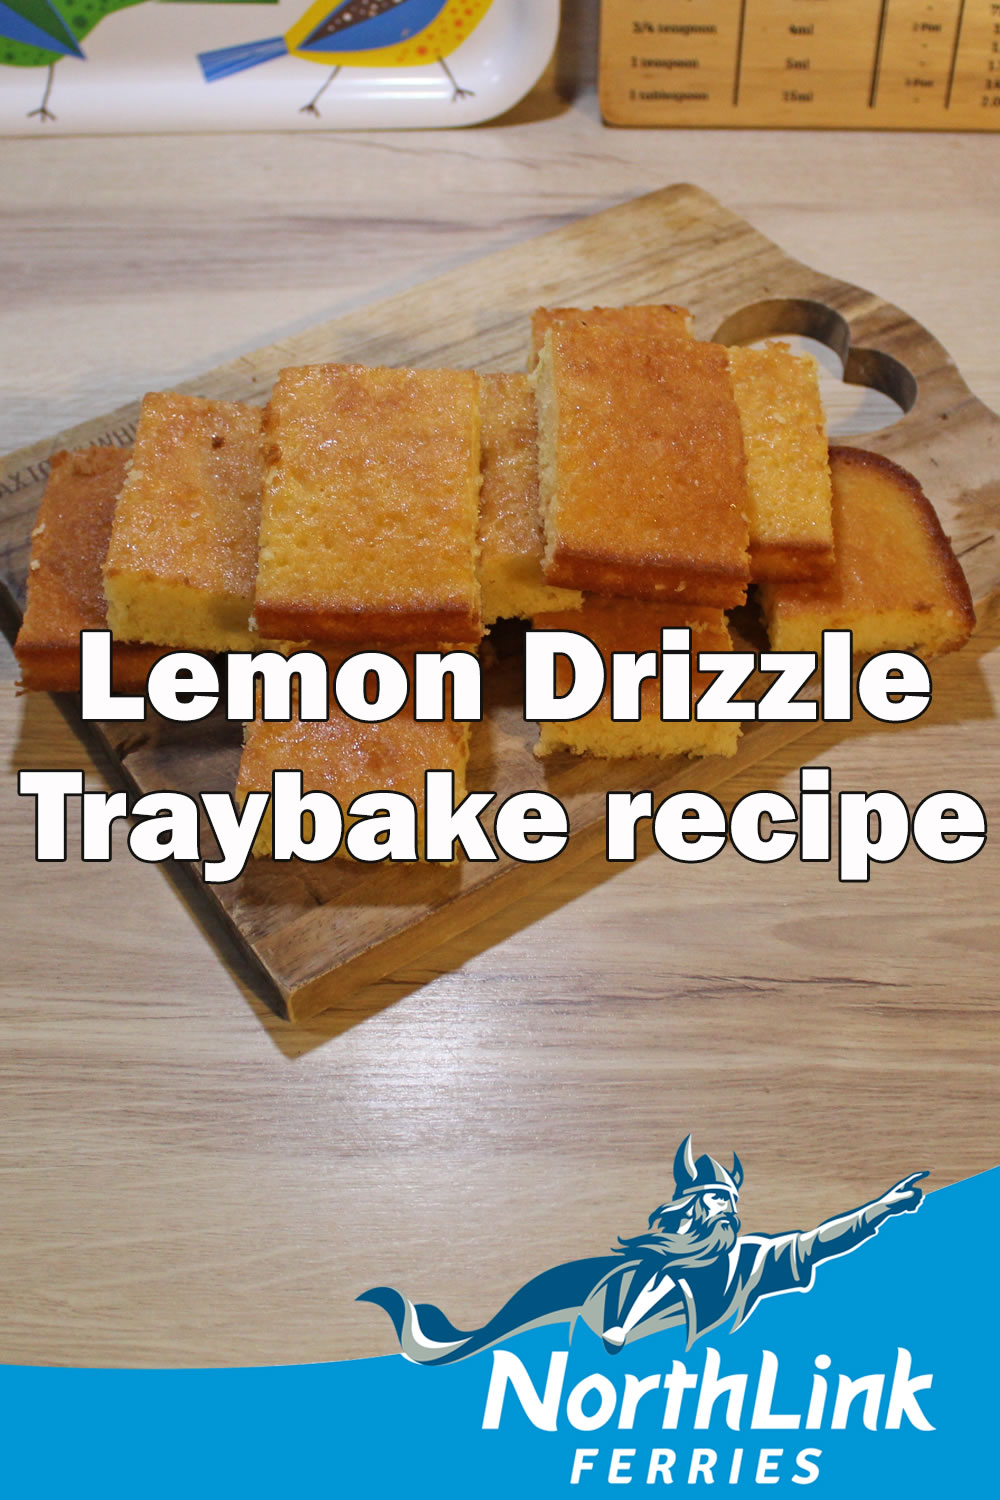 Lemon Drizzle Traybake recipe